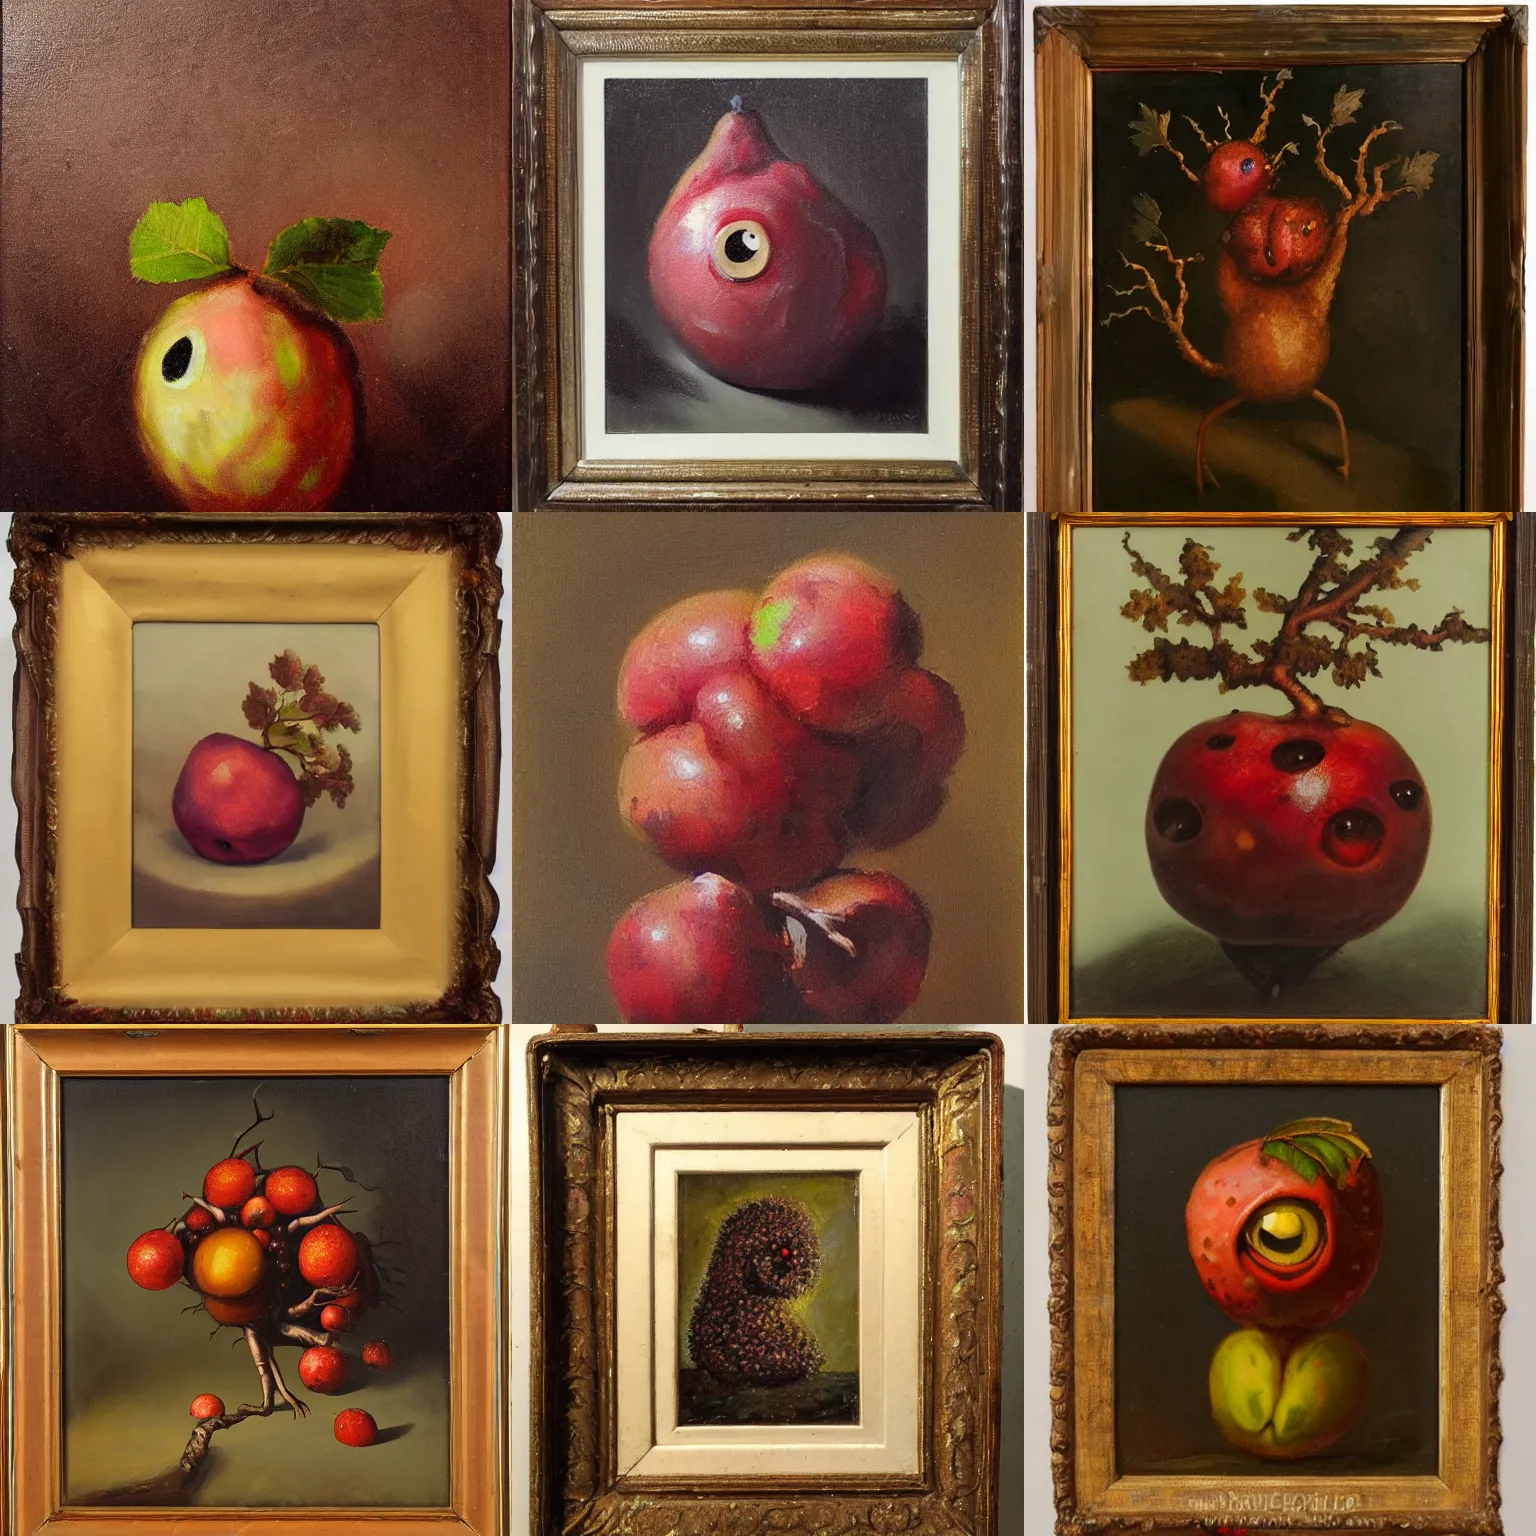 Prompt: tonalist portrait of crataegus fruit creature with big eyes, studio lighting, expressive, visible brushstrokes, chiaroscuro